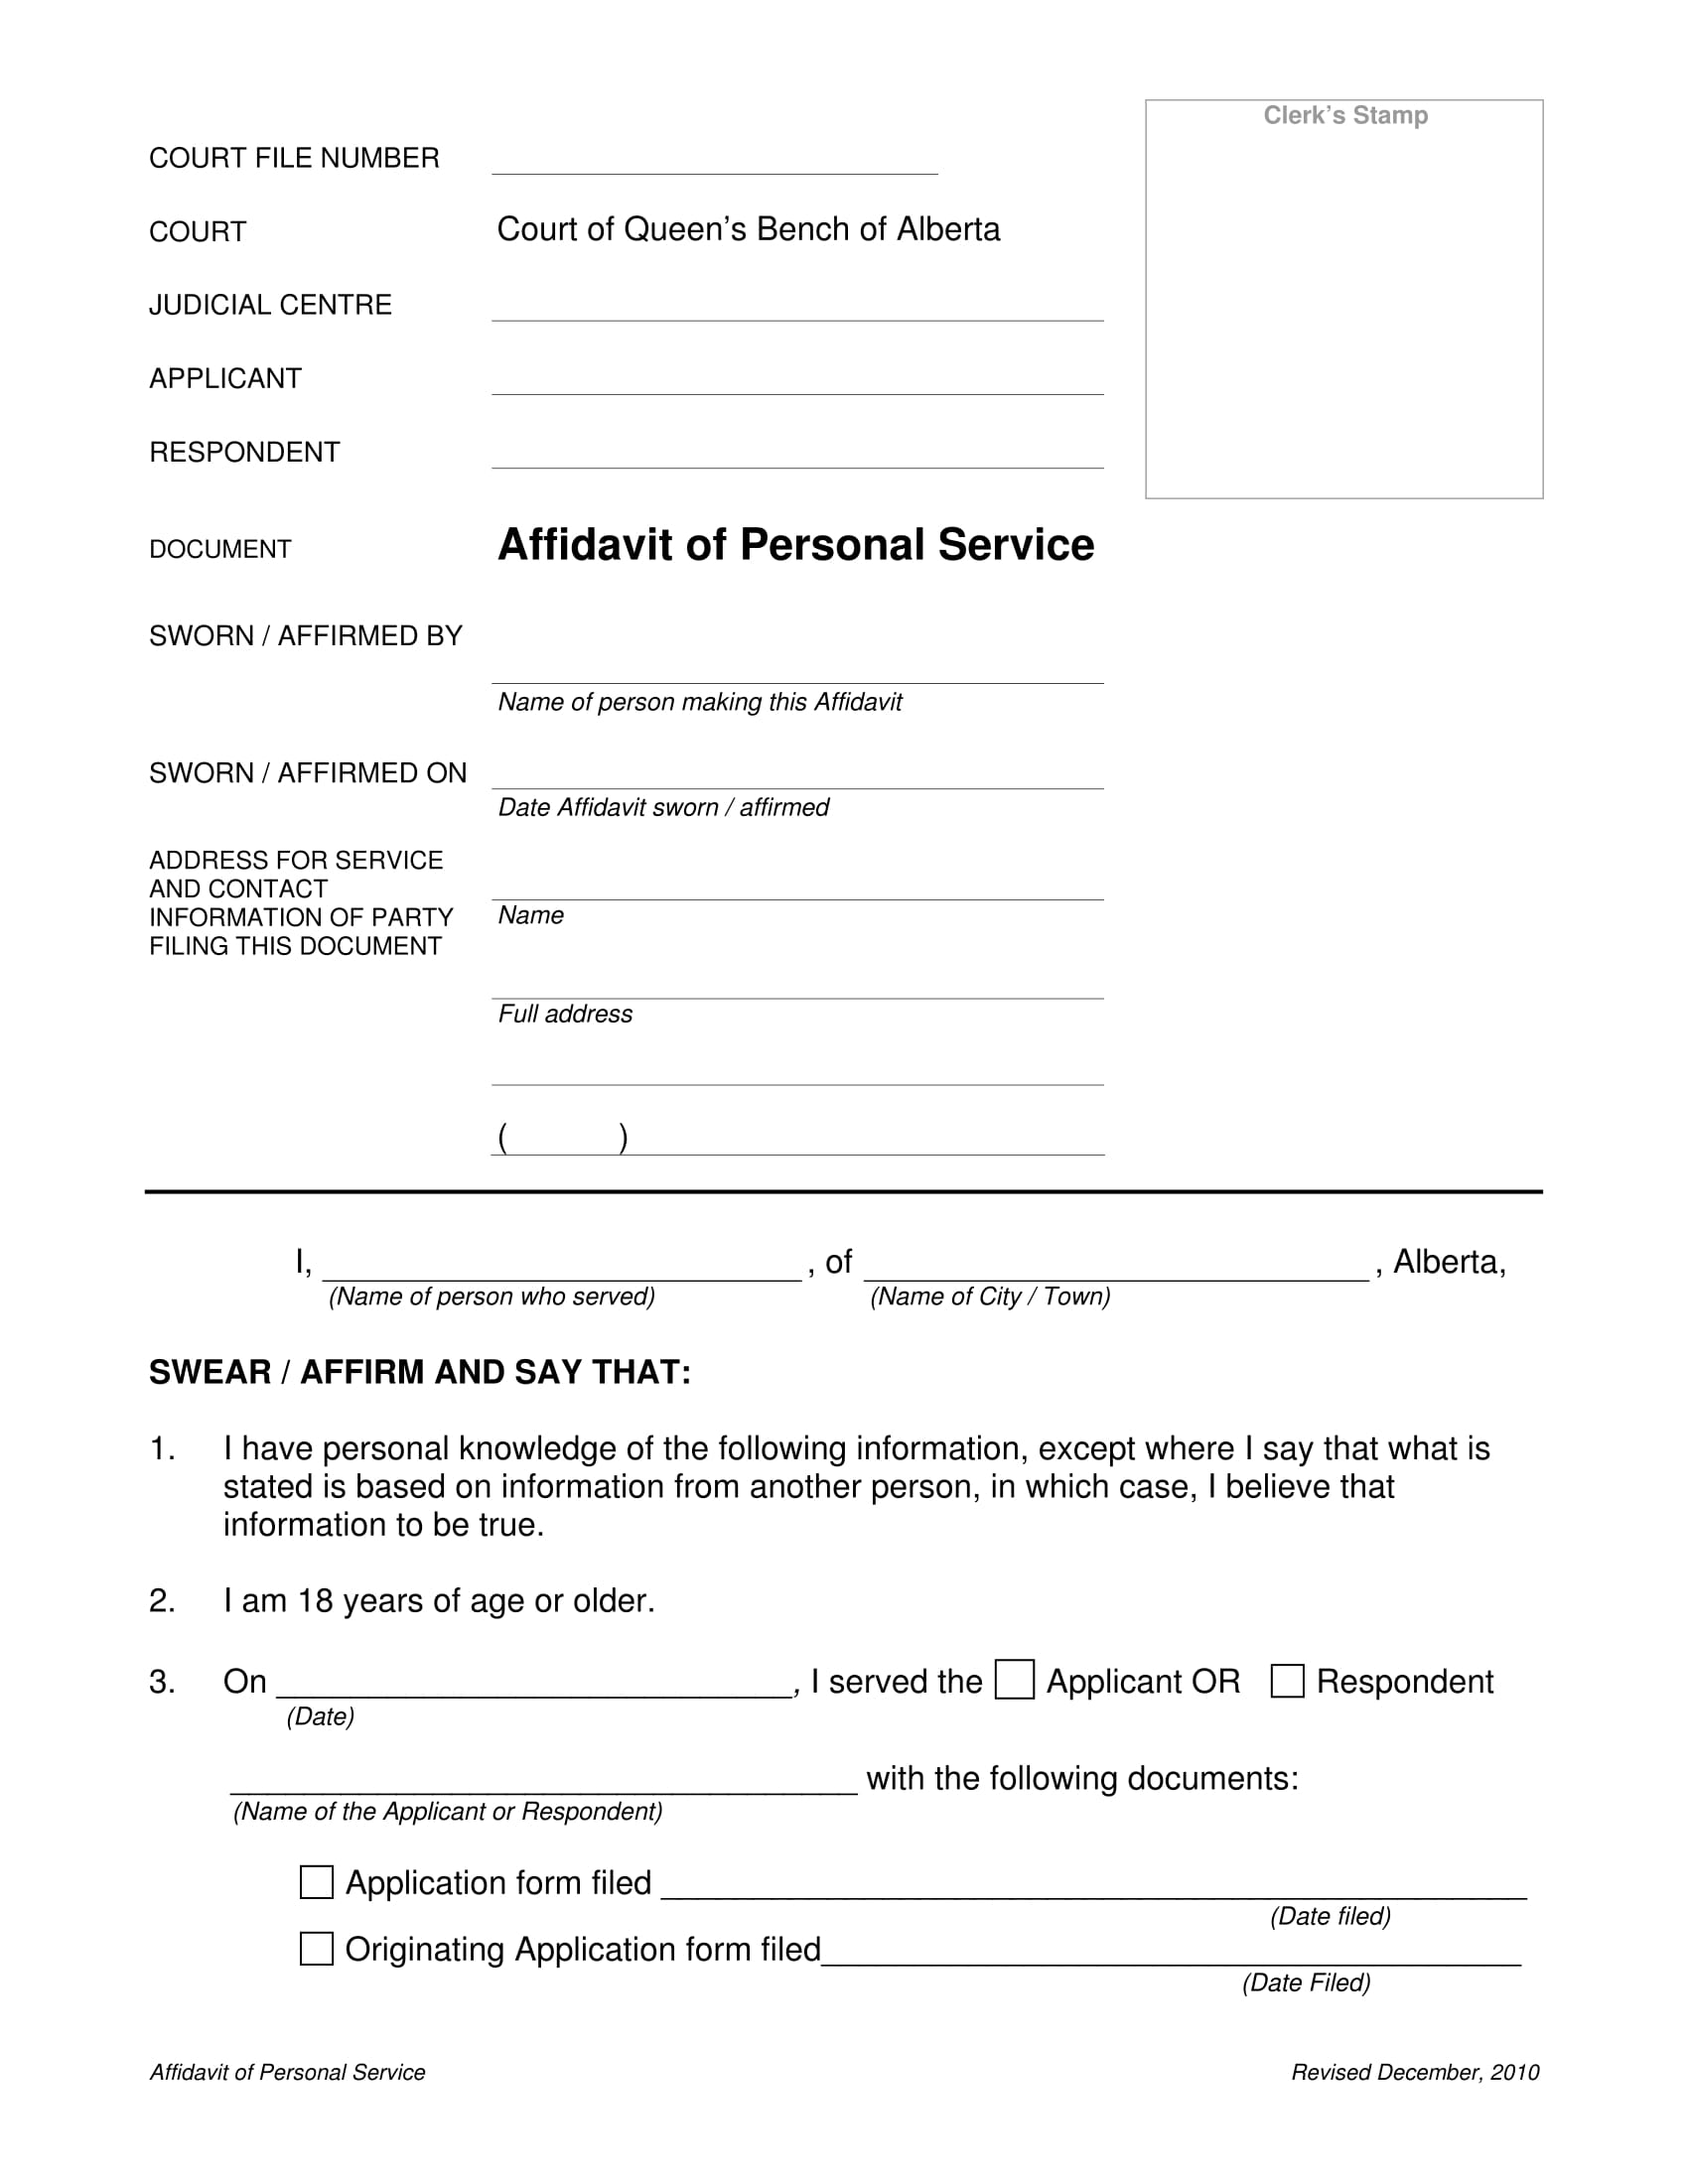 affidavit of personal service form 1